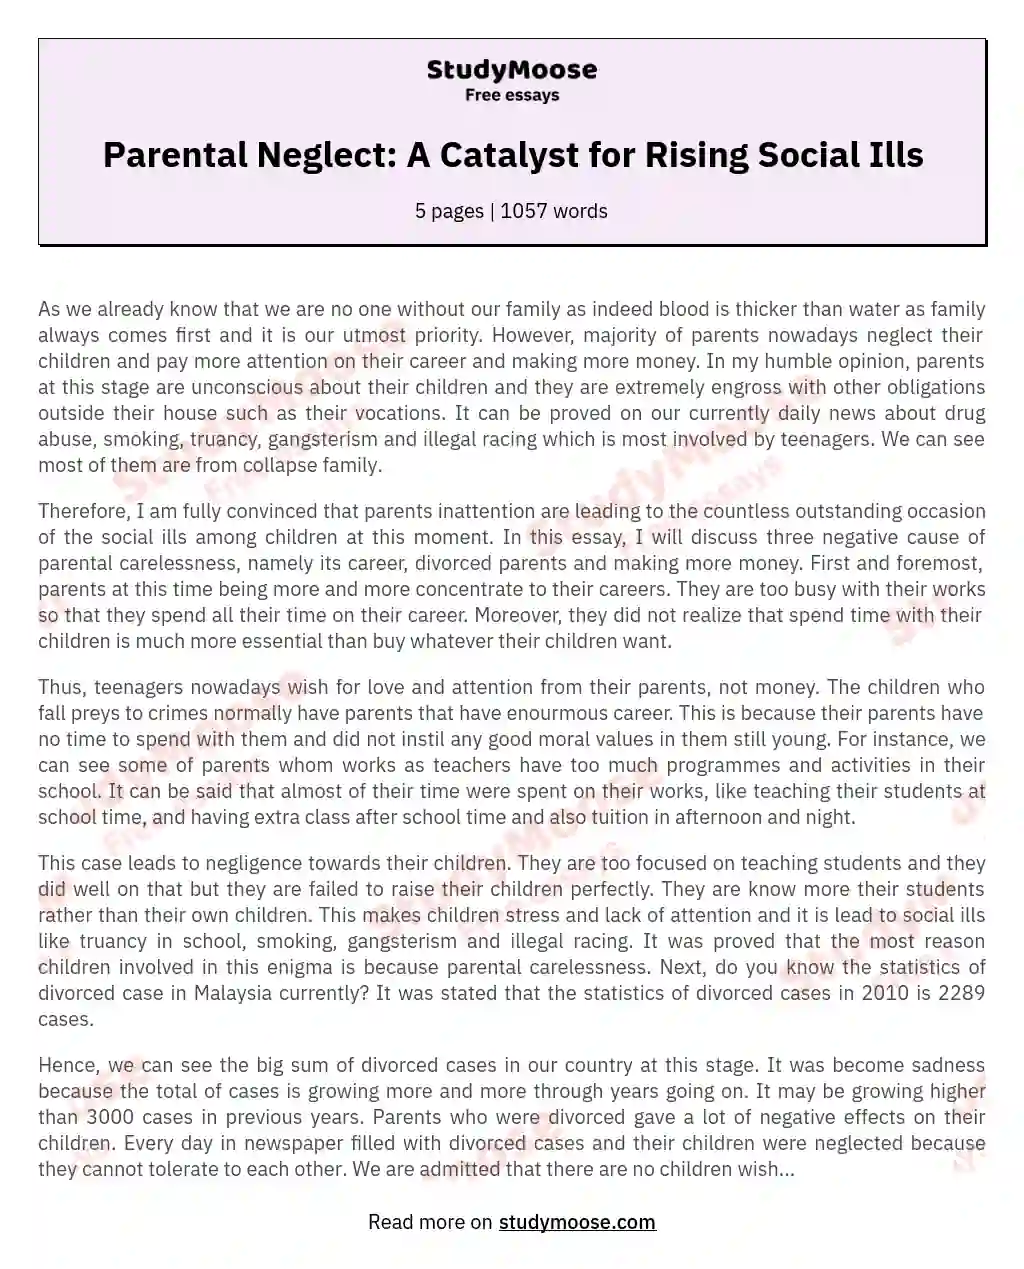 Parental Neglect: A Catalyst for Rising Social Ills essay